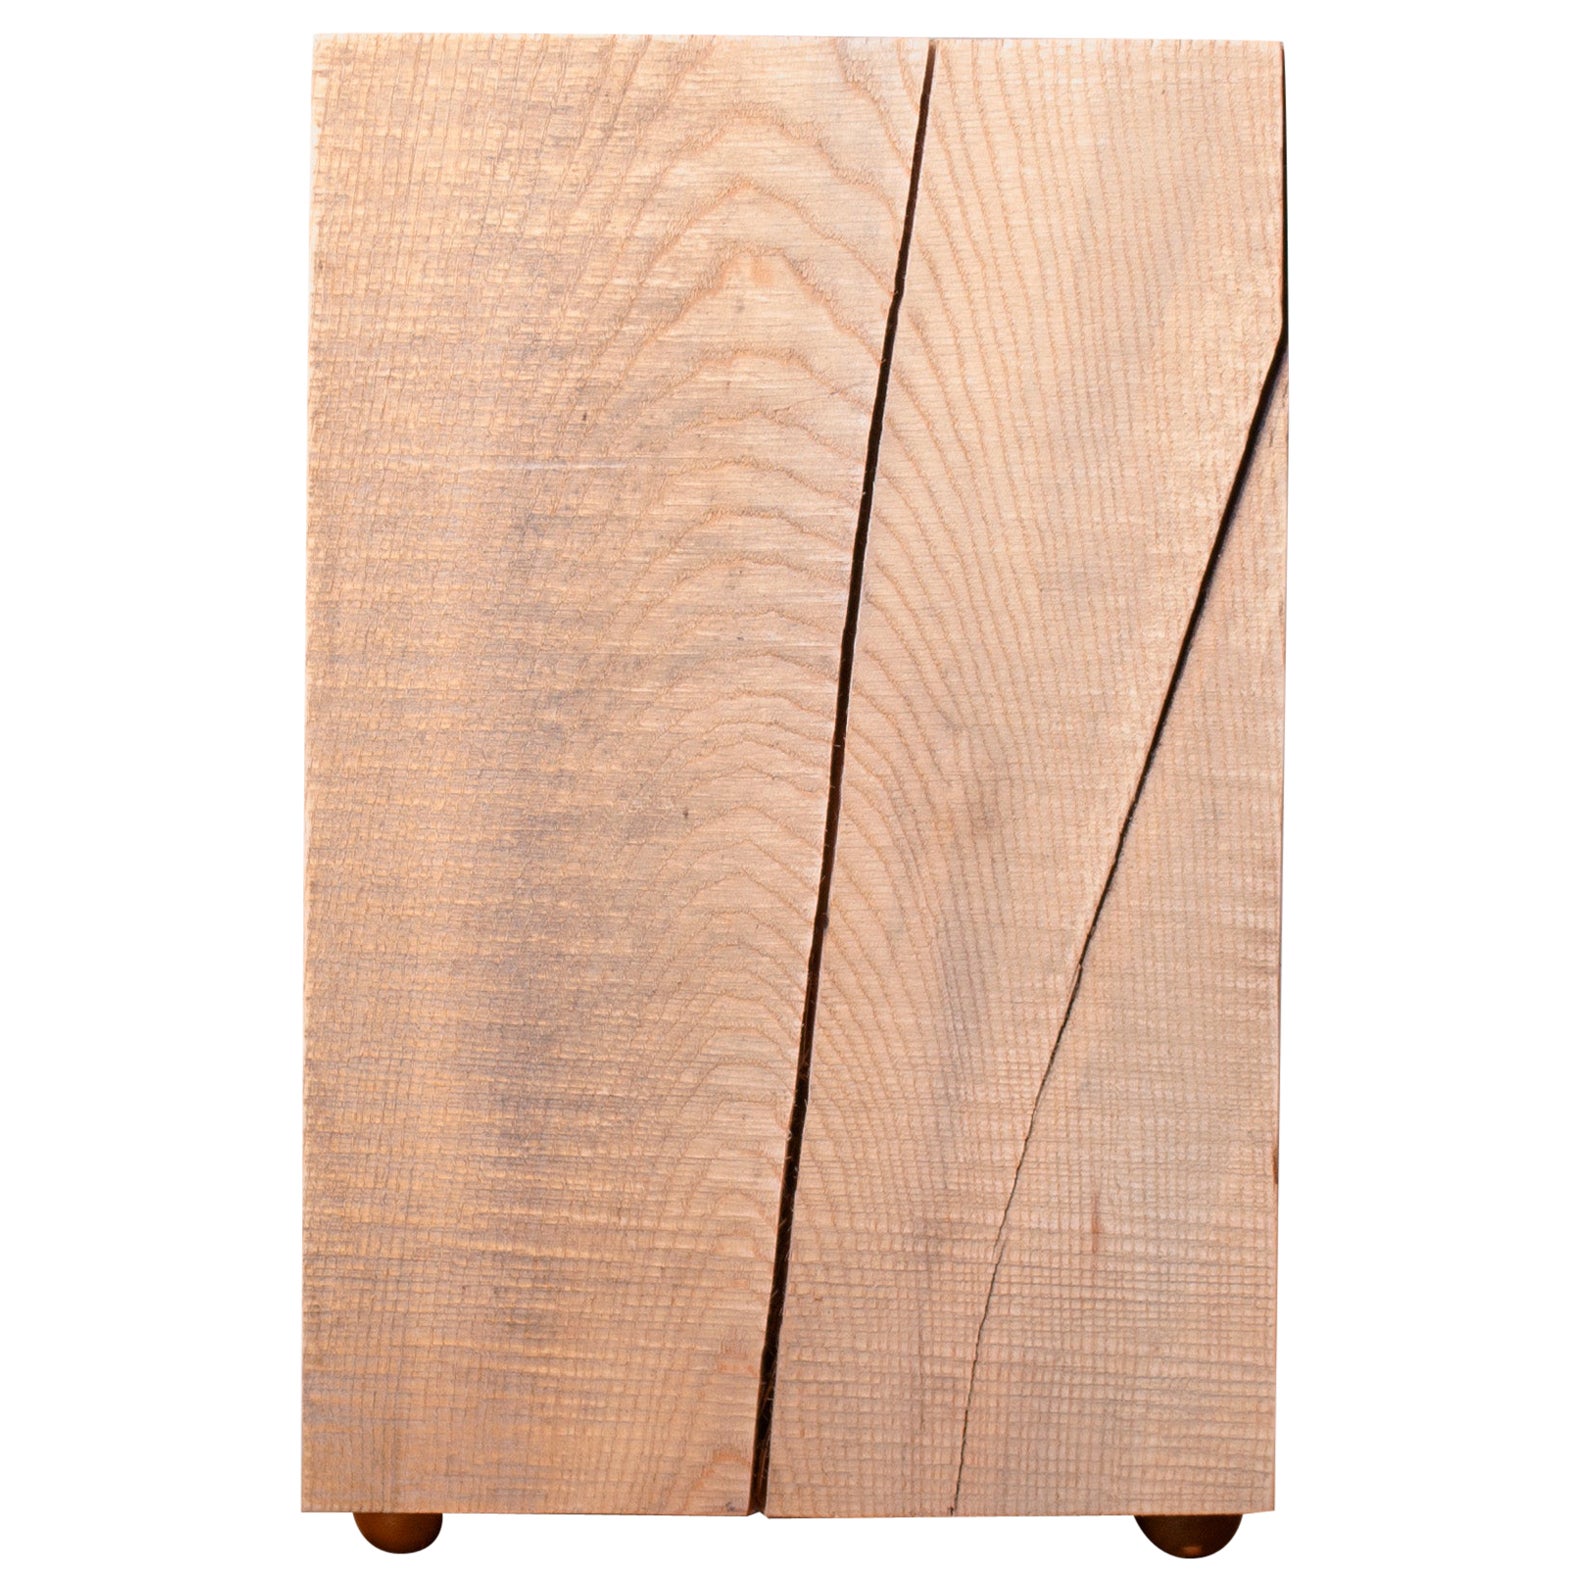 Table d'appoint Wood Block, frêne massif, pieds en laiton